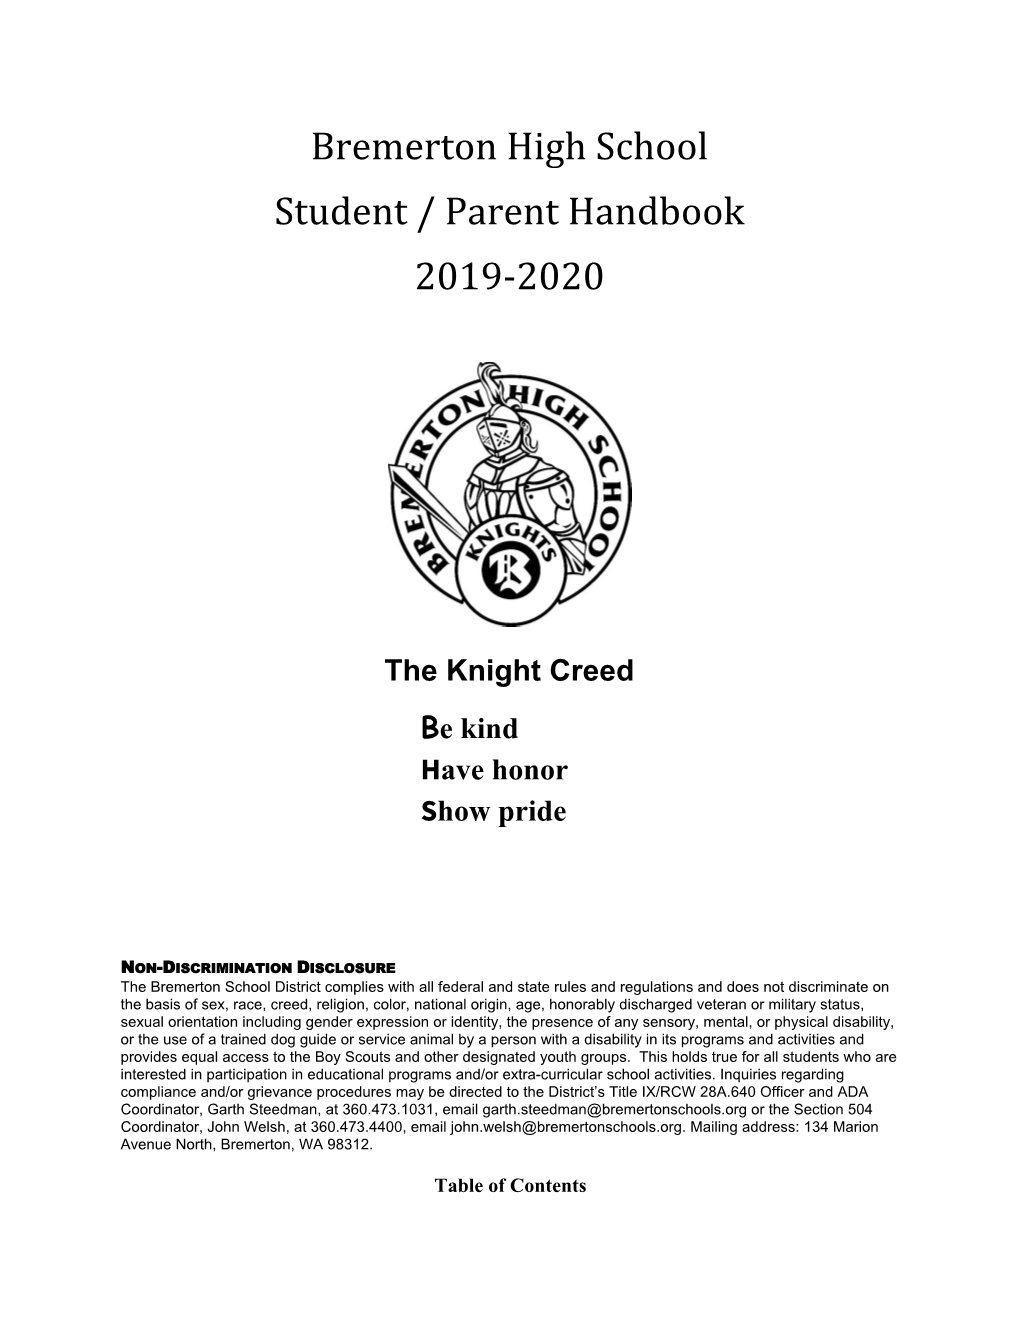 Bremerton High School Student / Parent Handbook 2019-2020